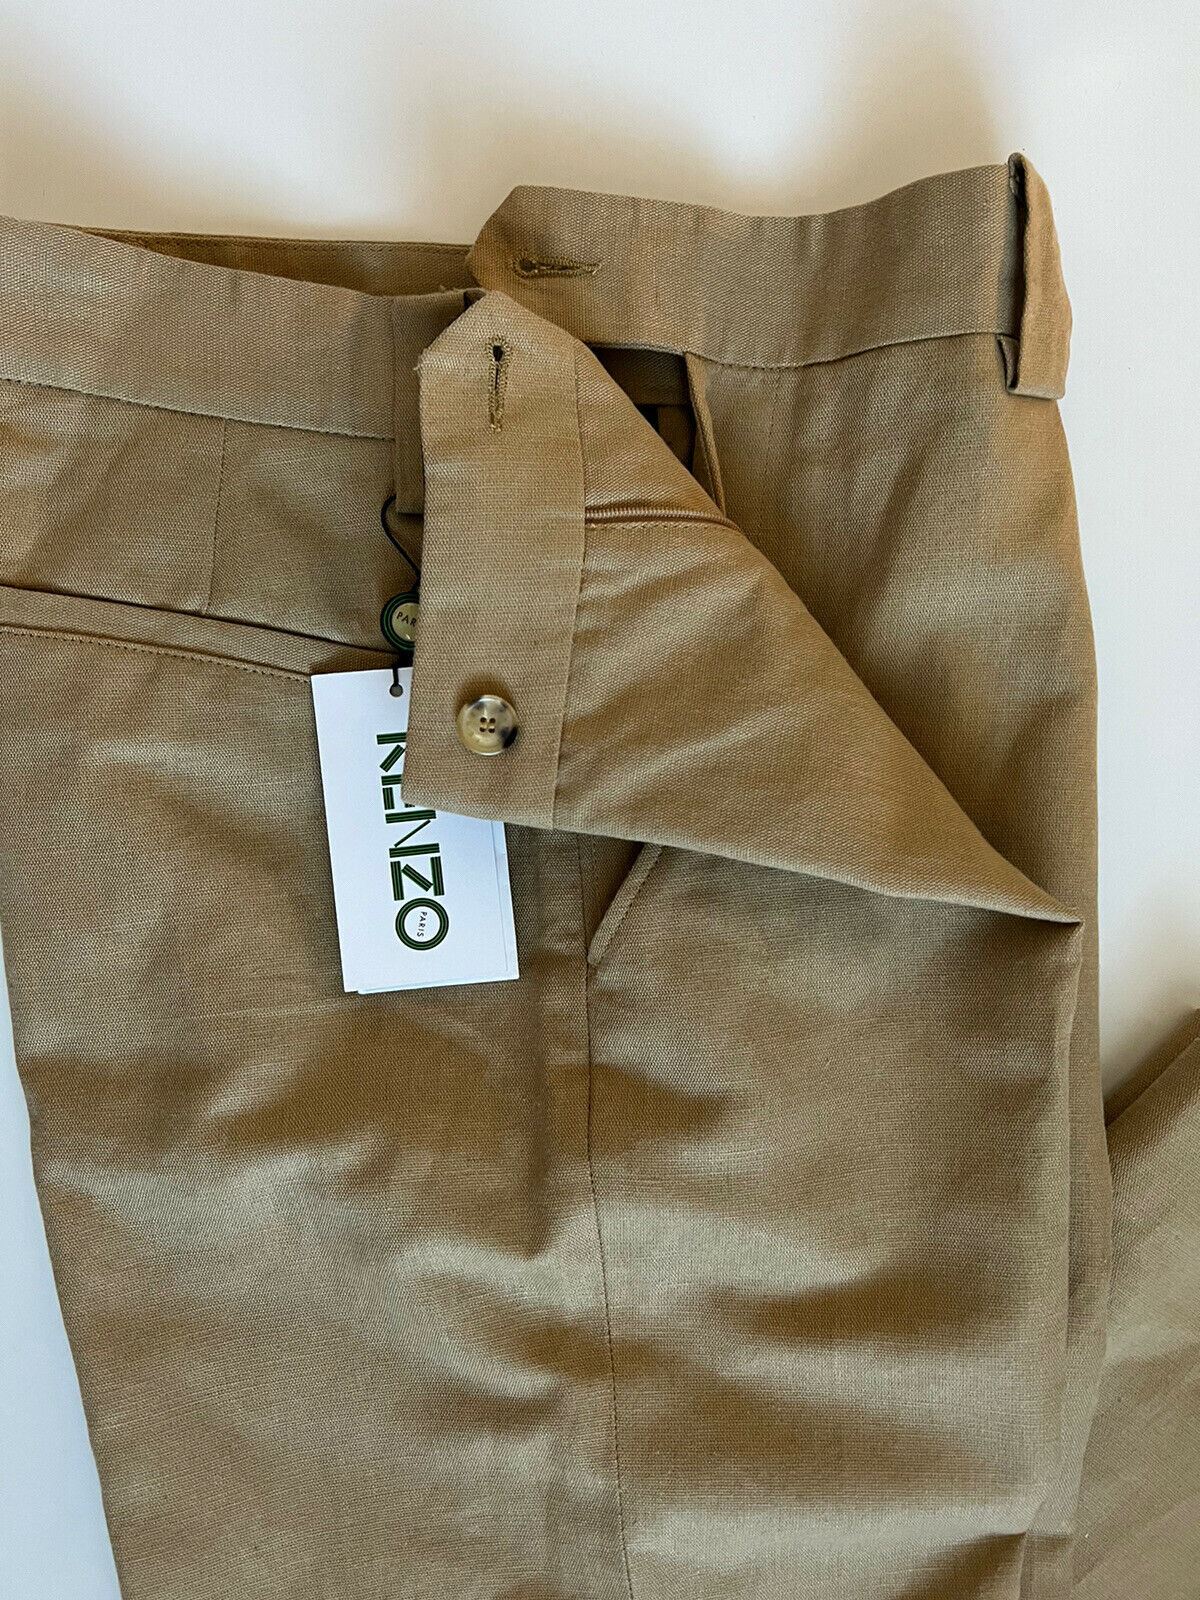 NWT $325 Kenzo Men's Dark Beige Casual Linen Pants Size 34 US (50 Euro)